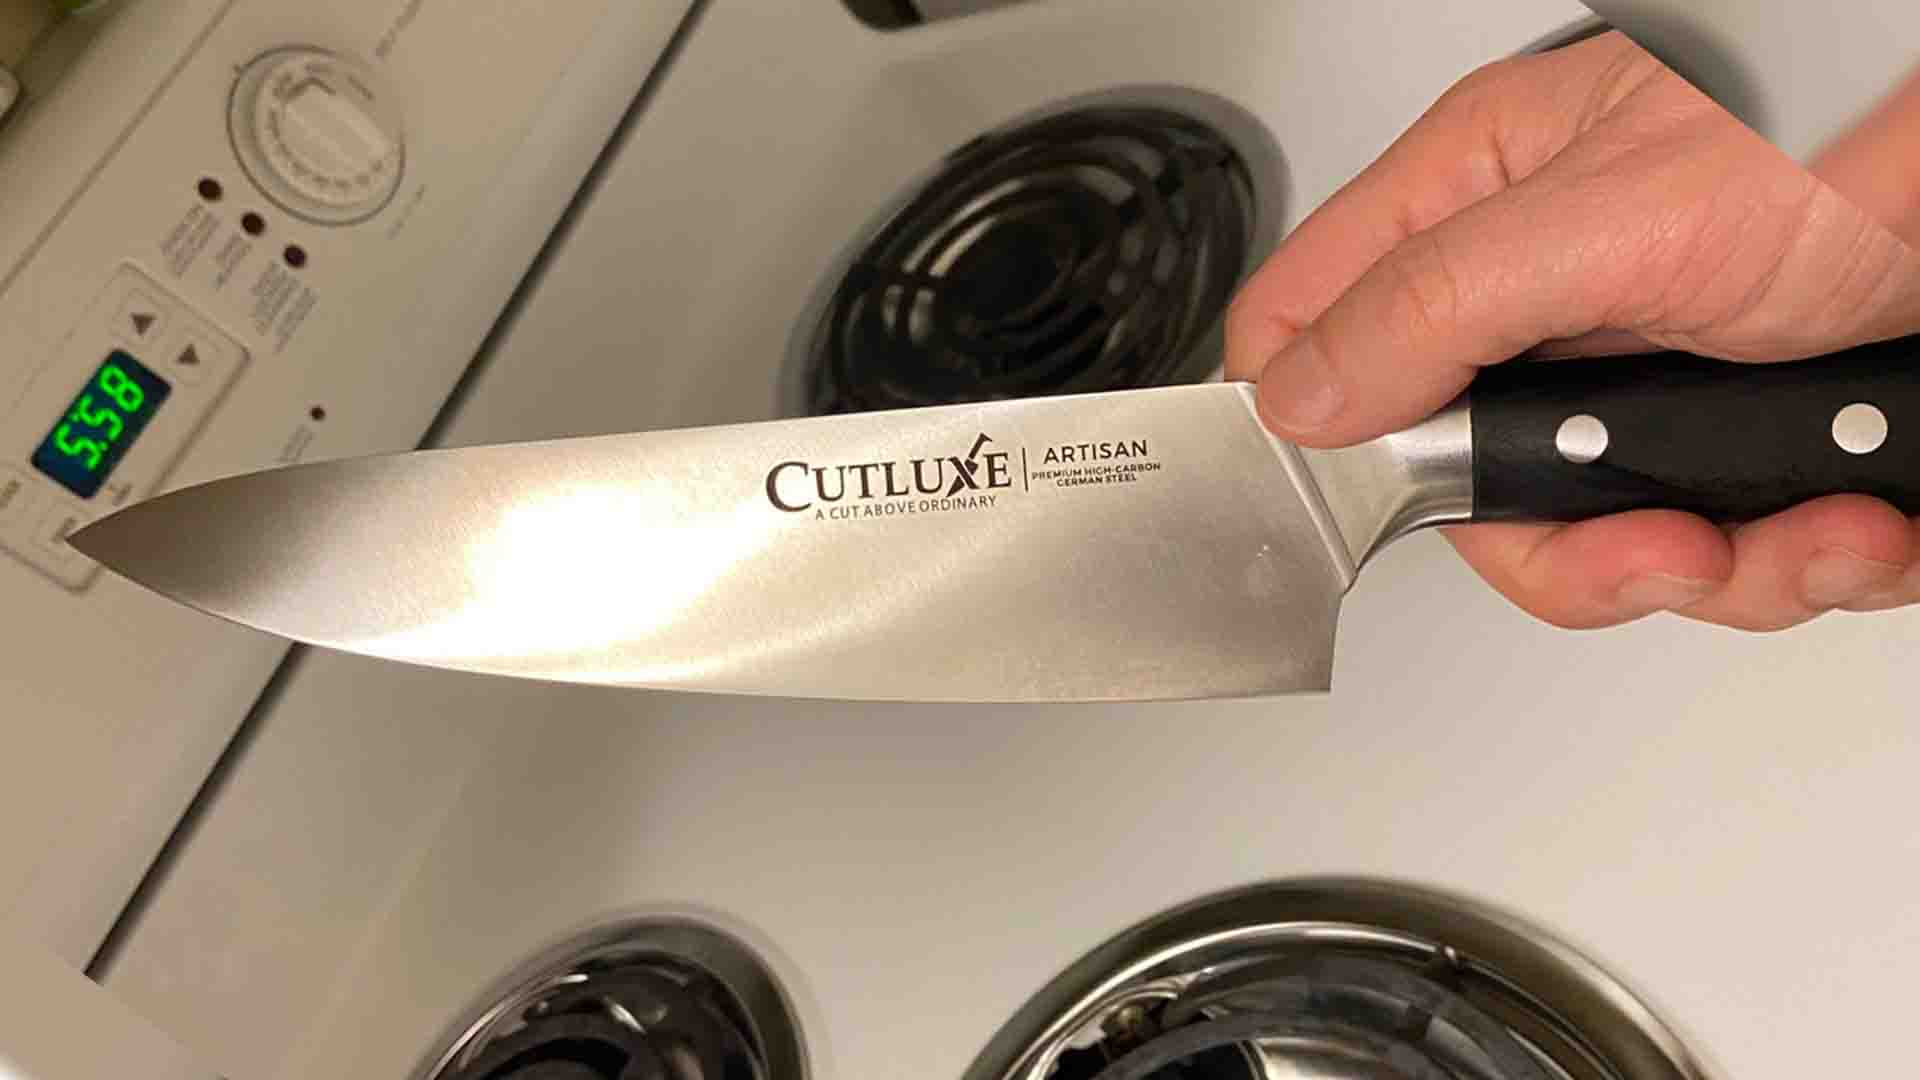 Best Carbon Steel Kitchen Knives